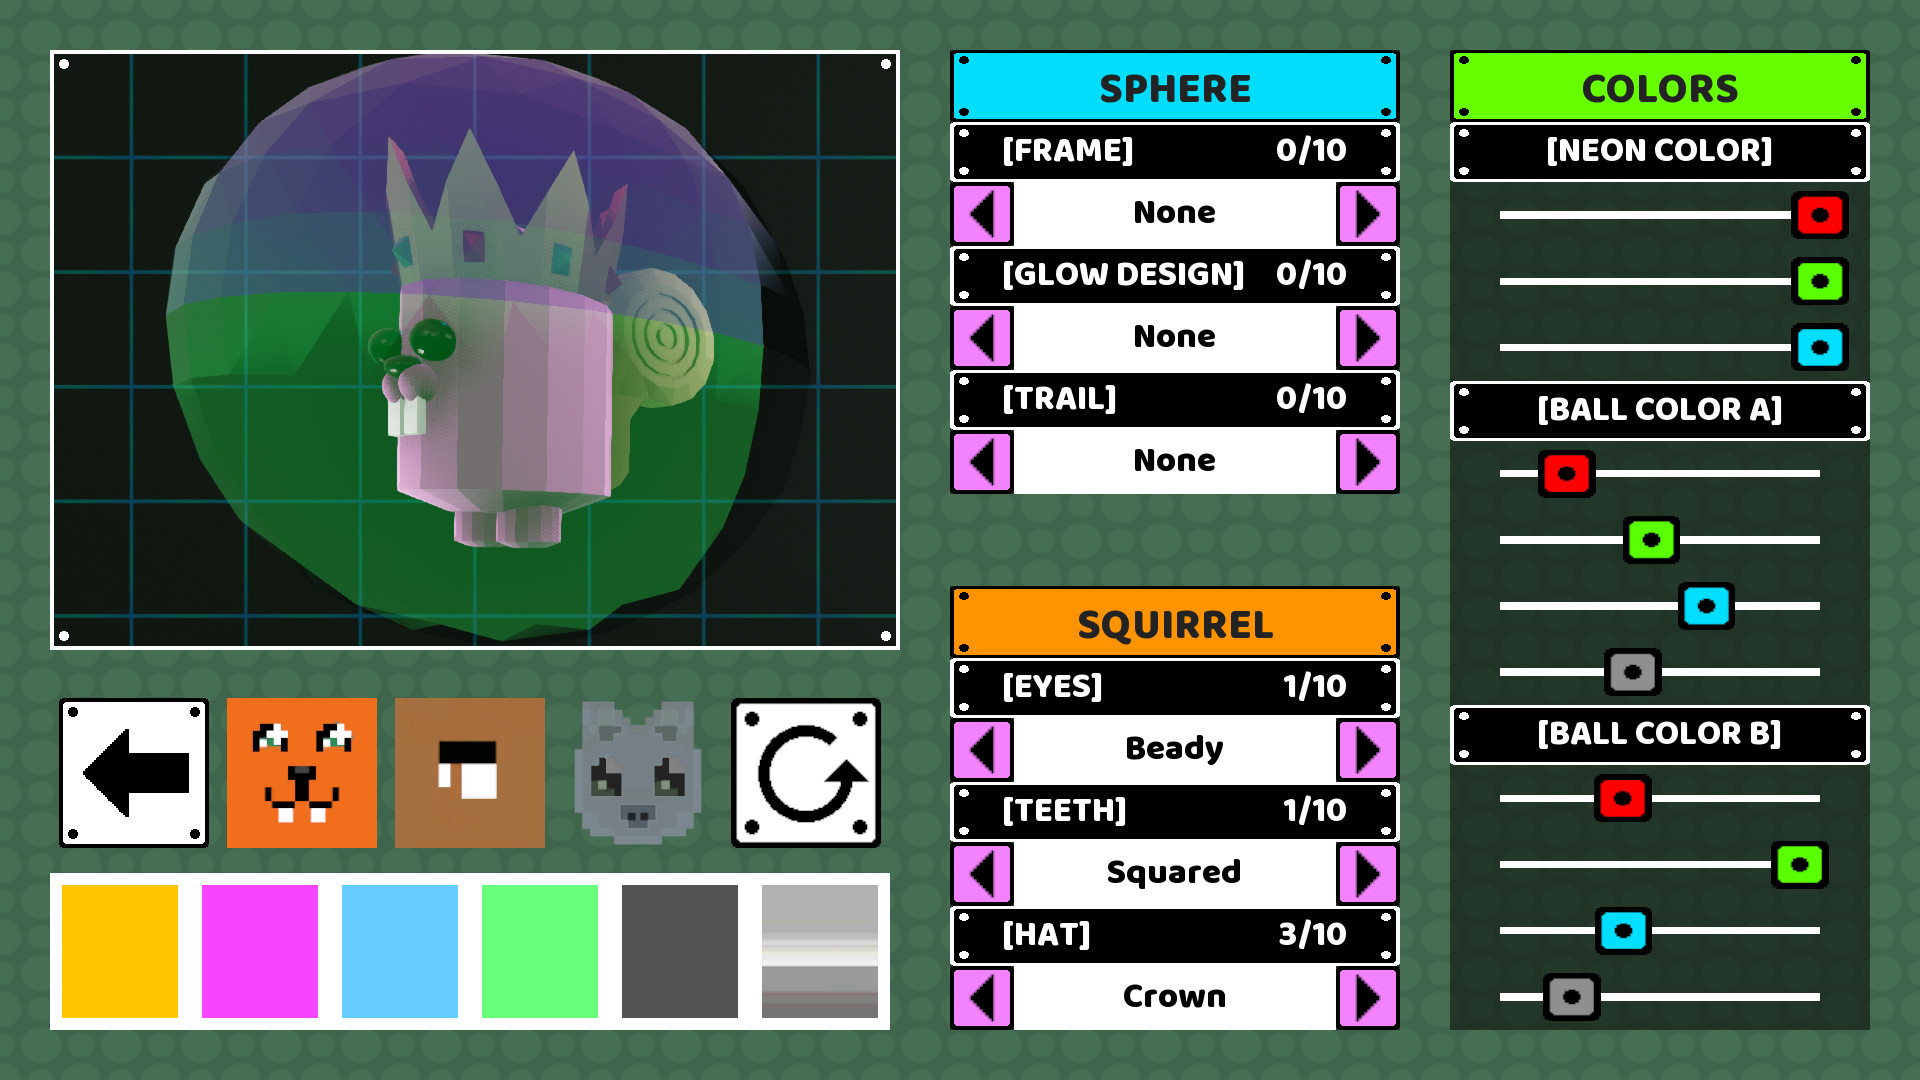 Squirrel Sphere screenshot